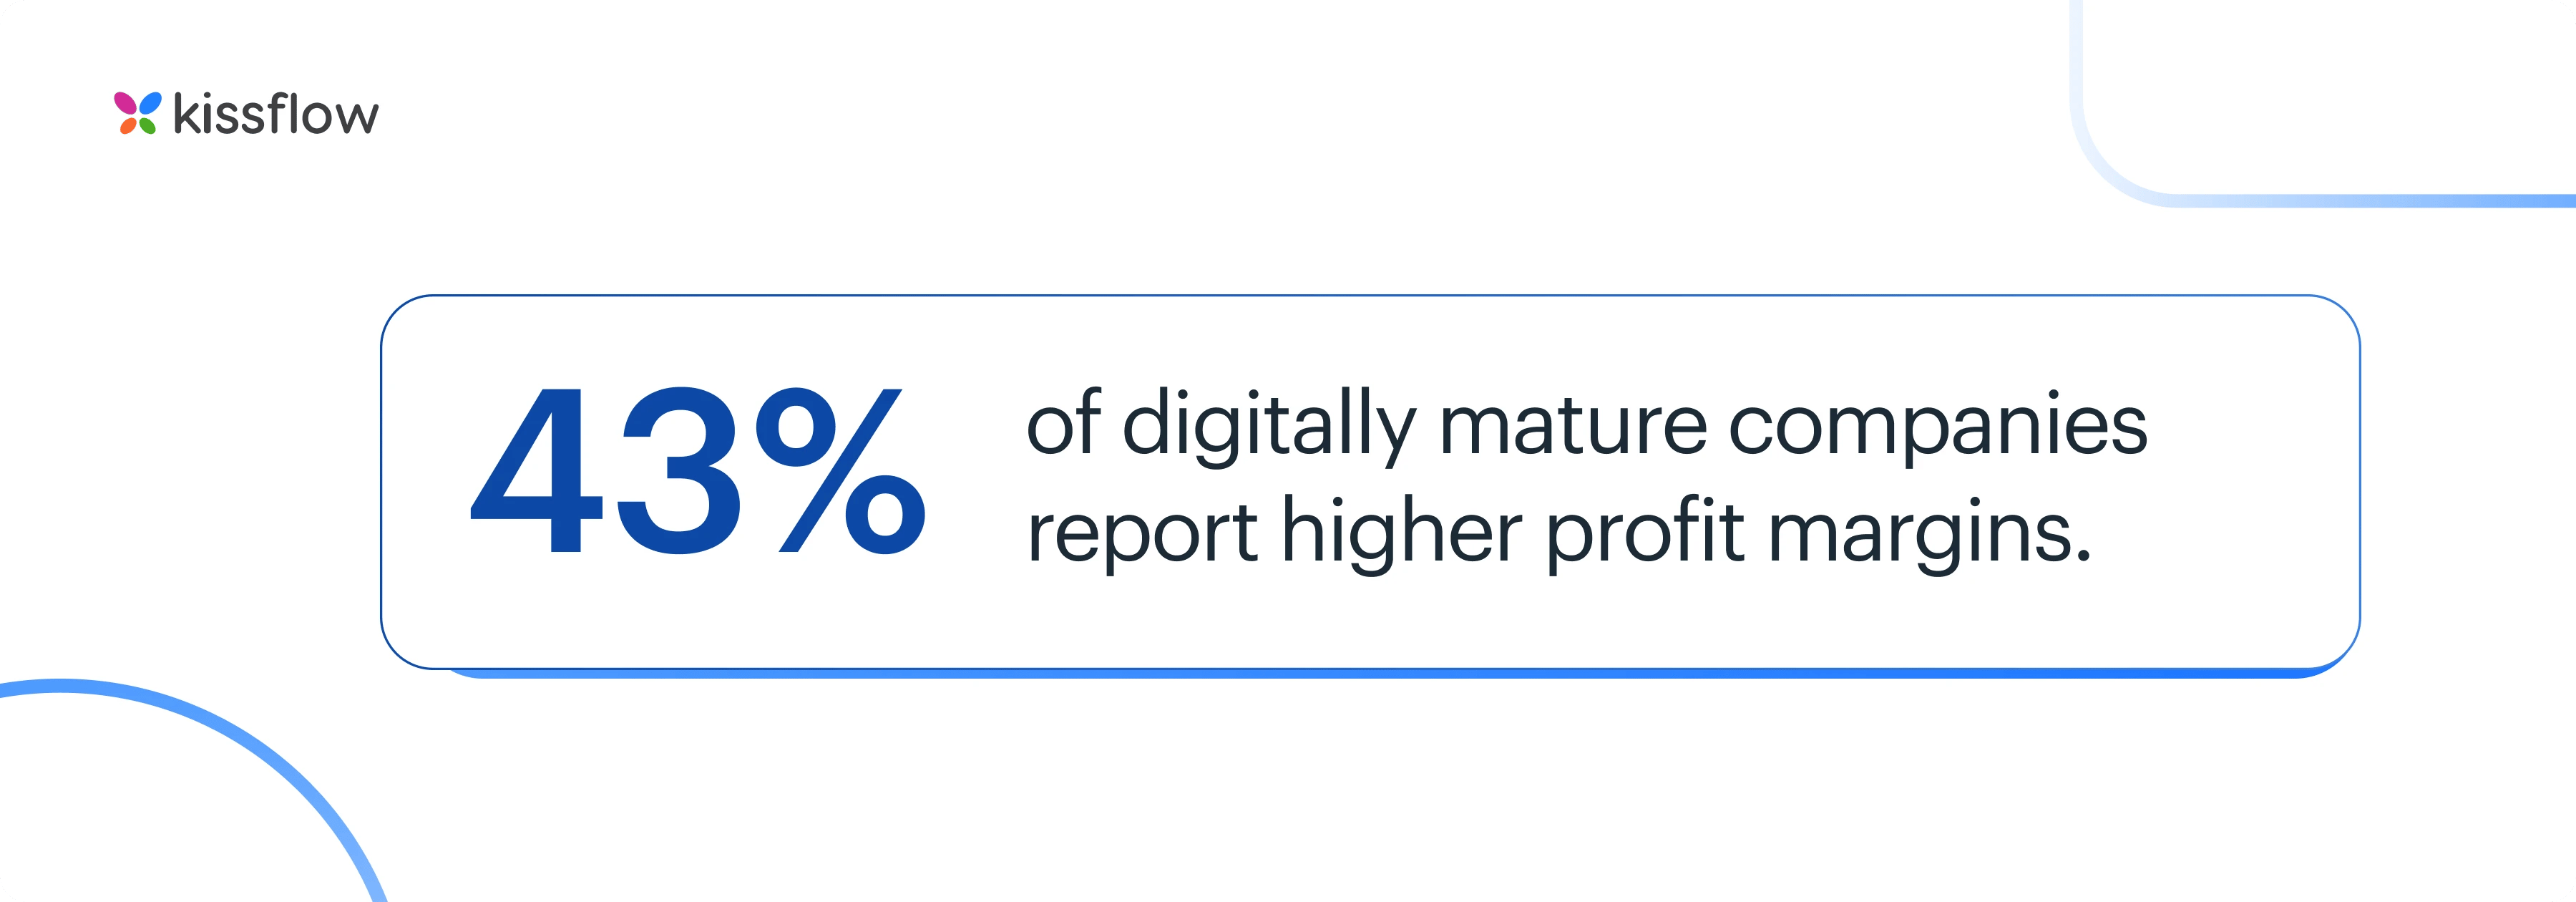 43_percent_of_digitally_mature_companies_report_higher_profit_margins